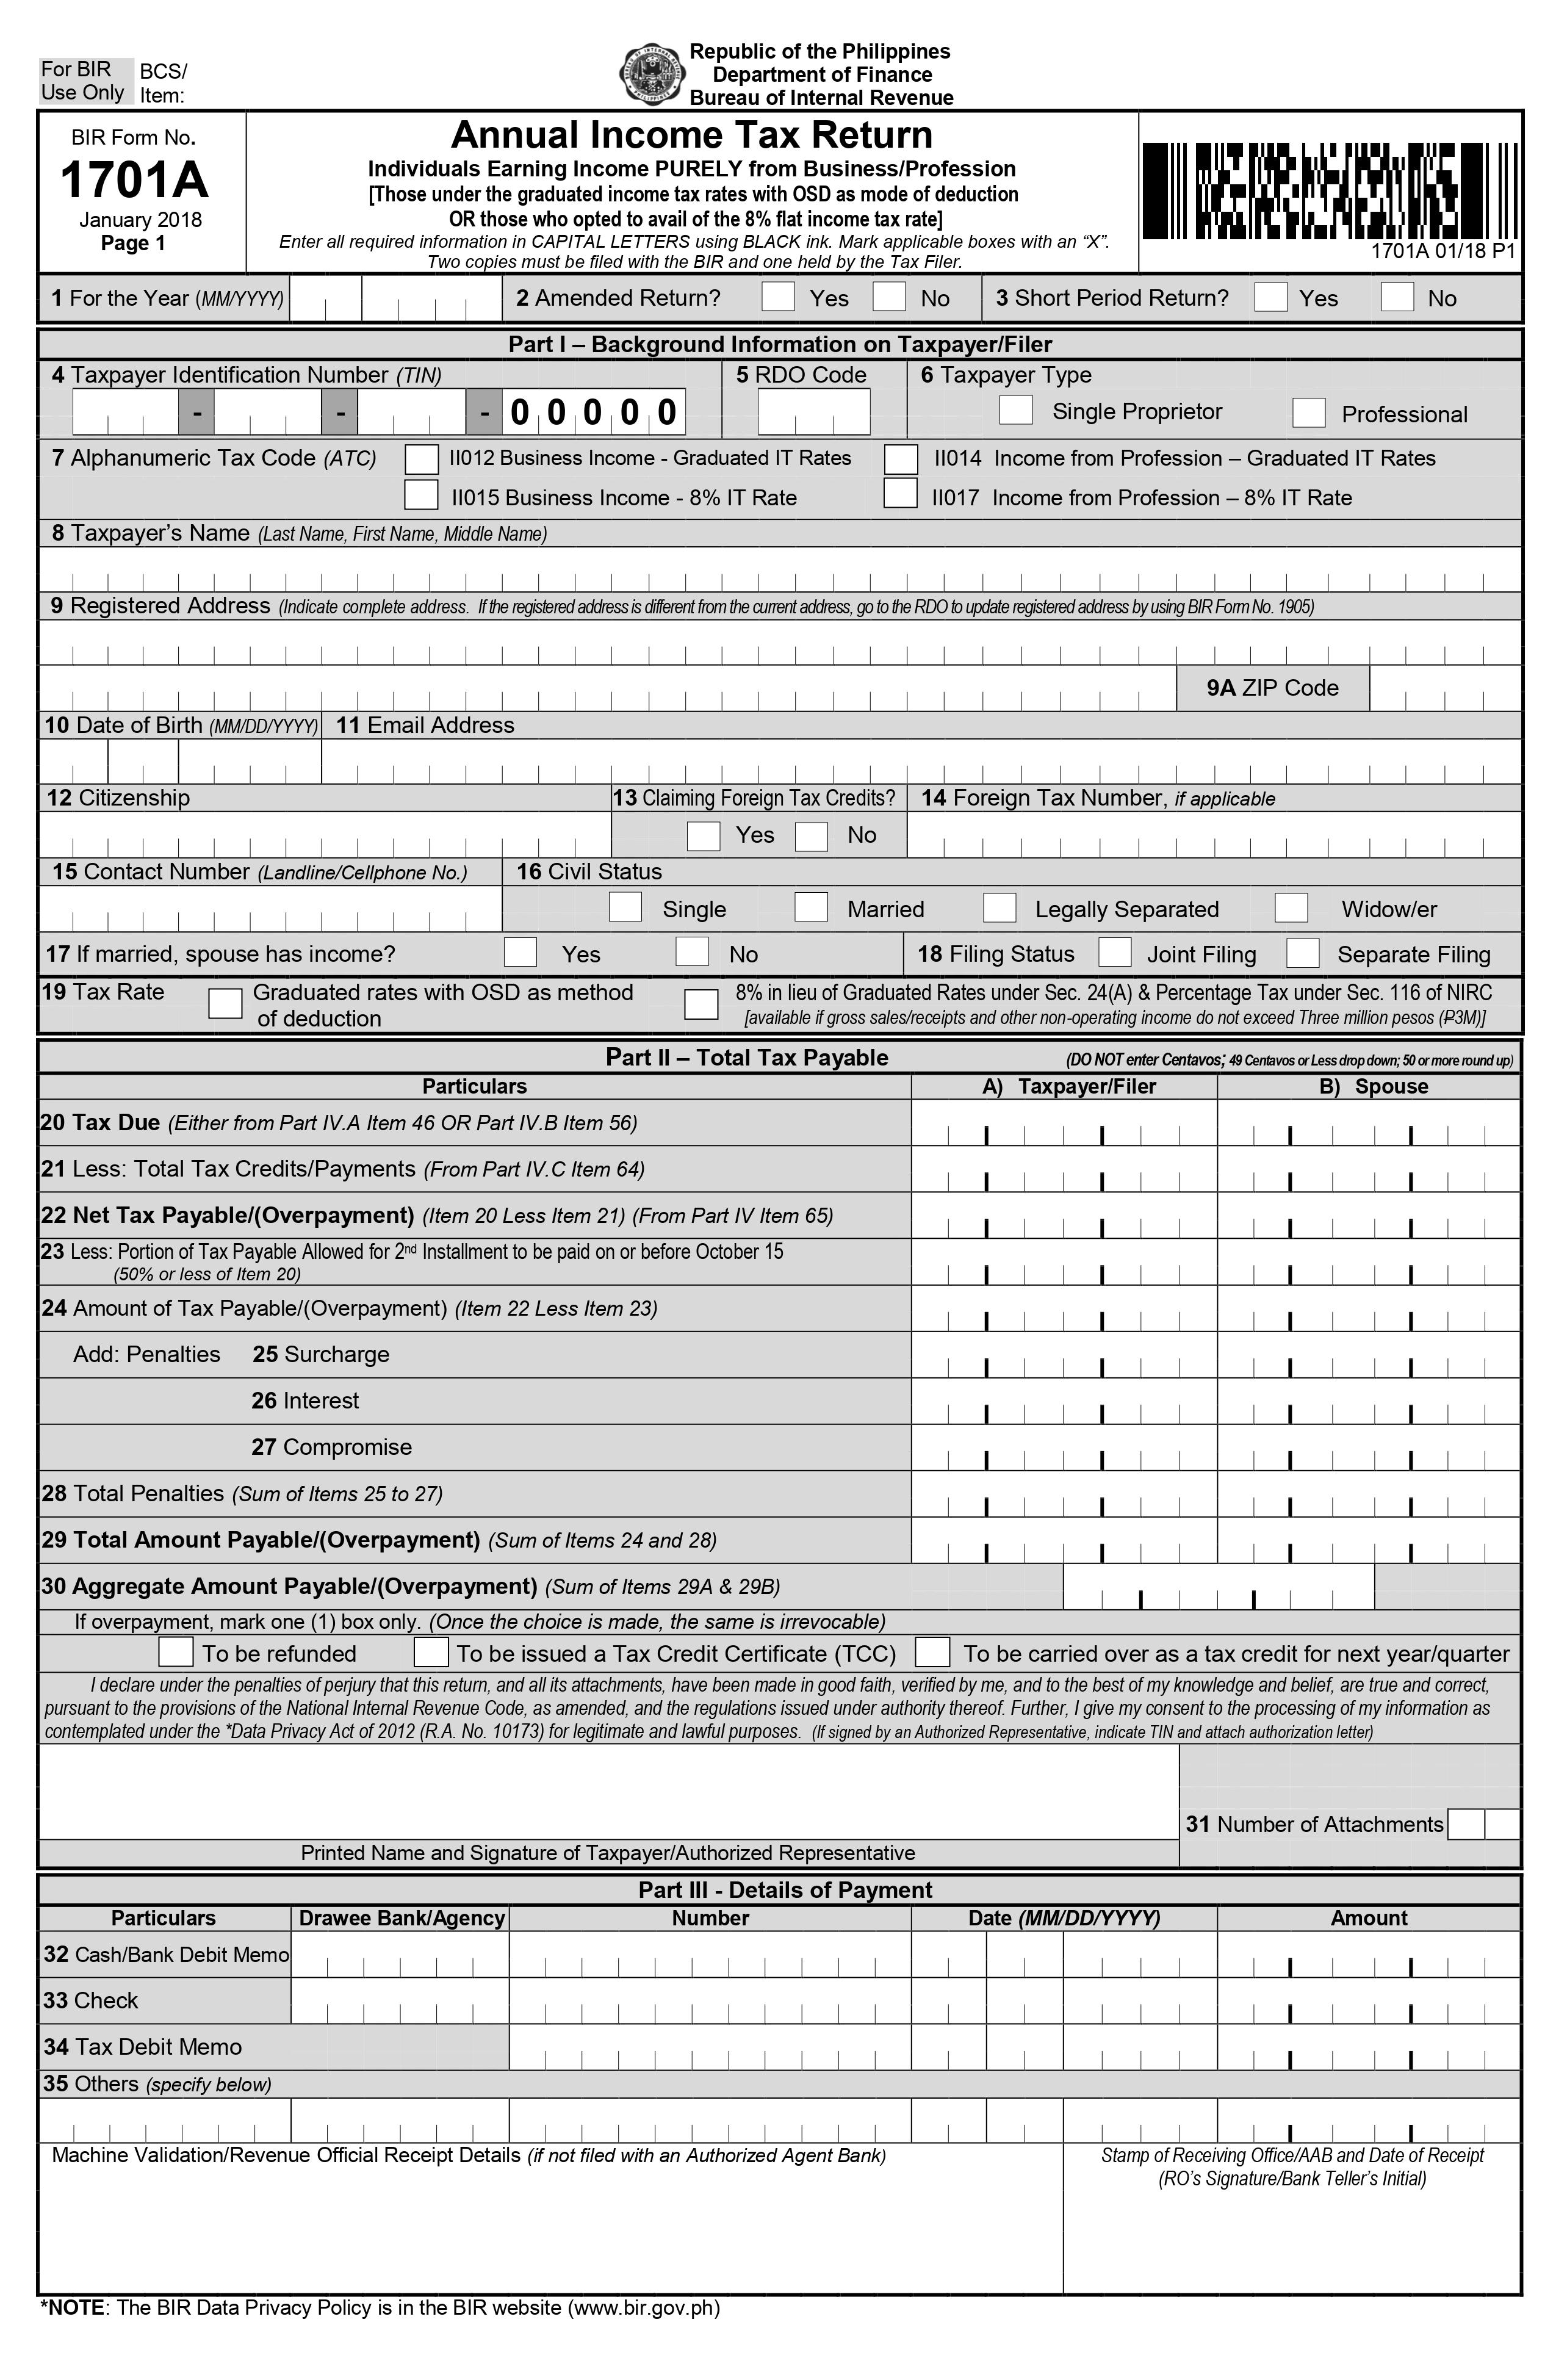 Annual Income Tax Return BIR Form 1701A-1